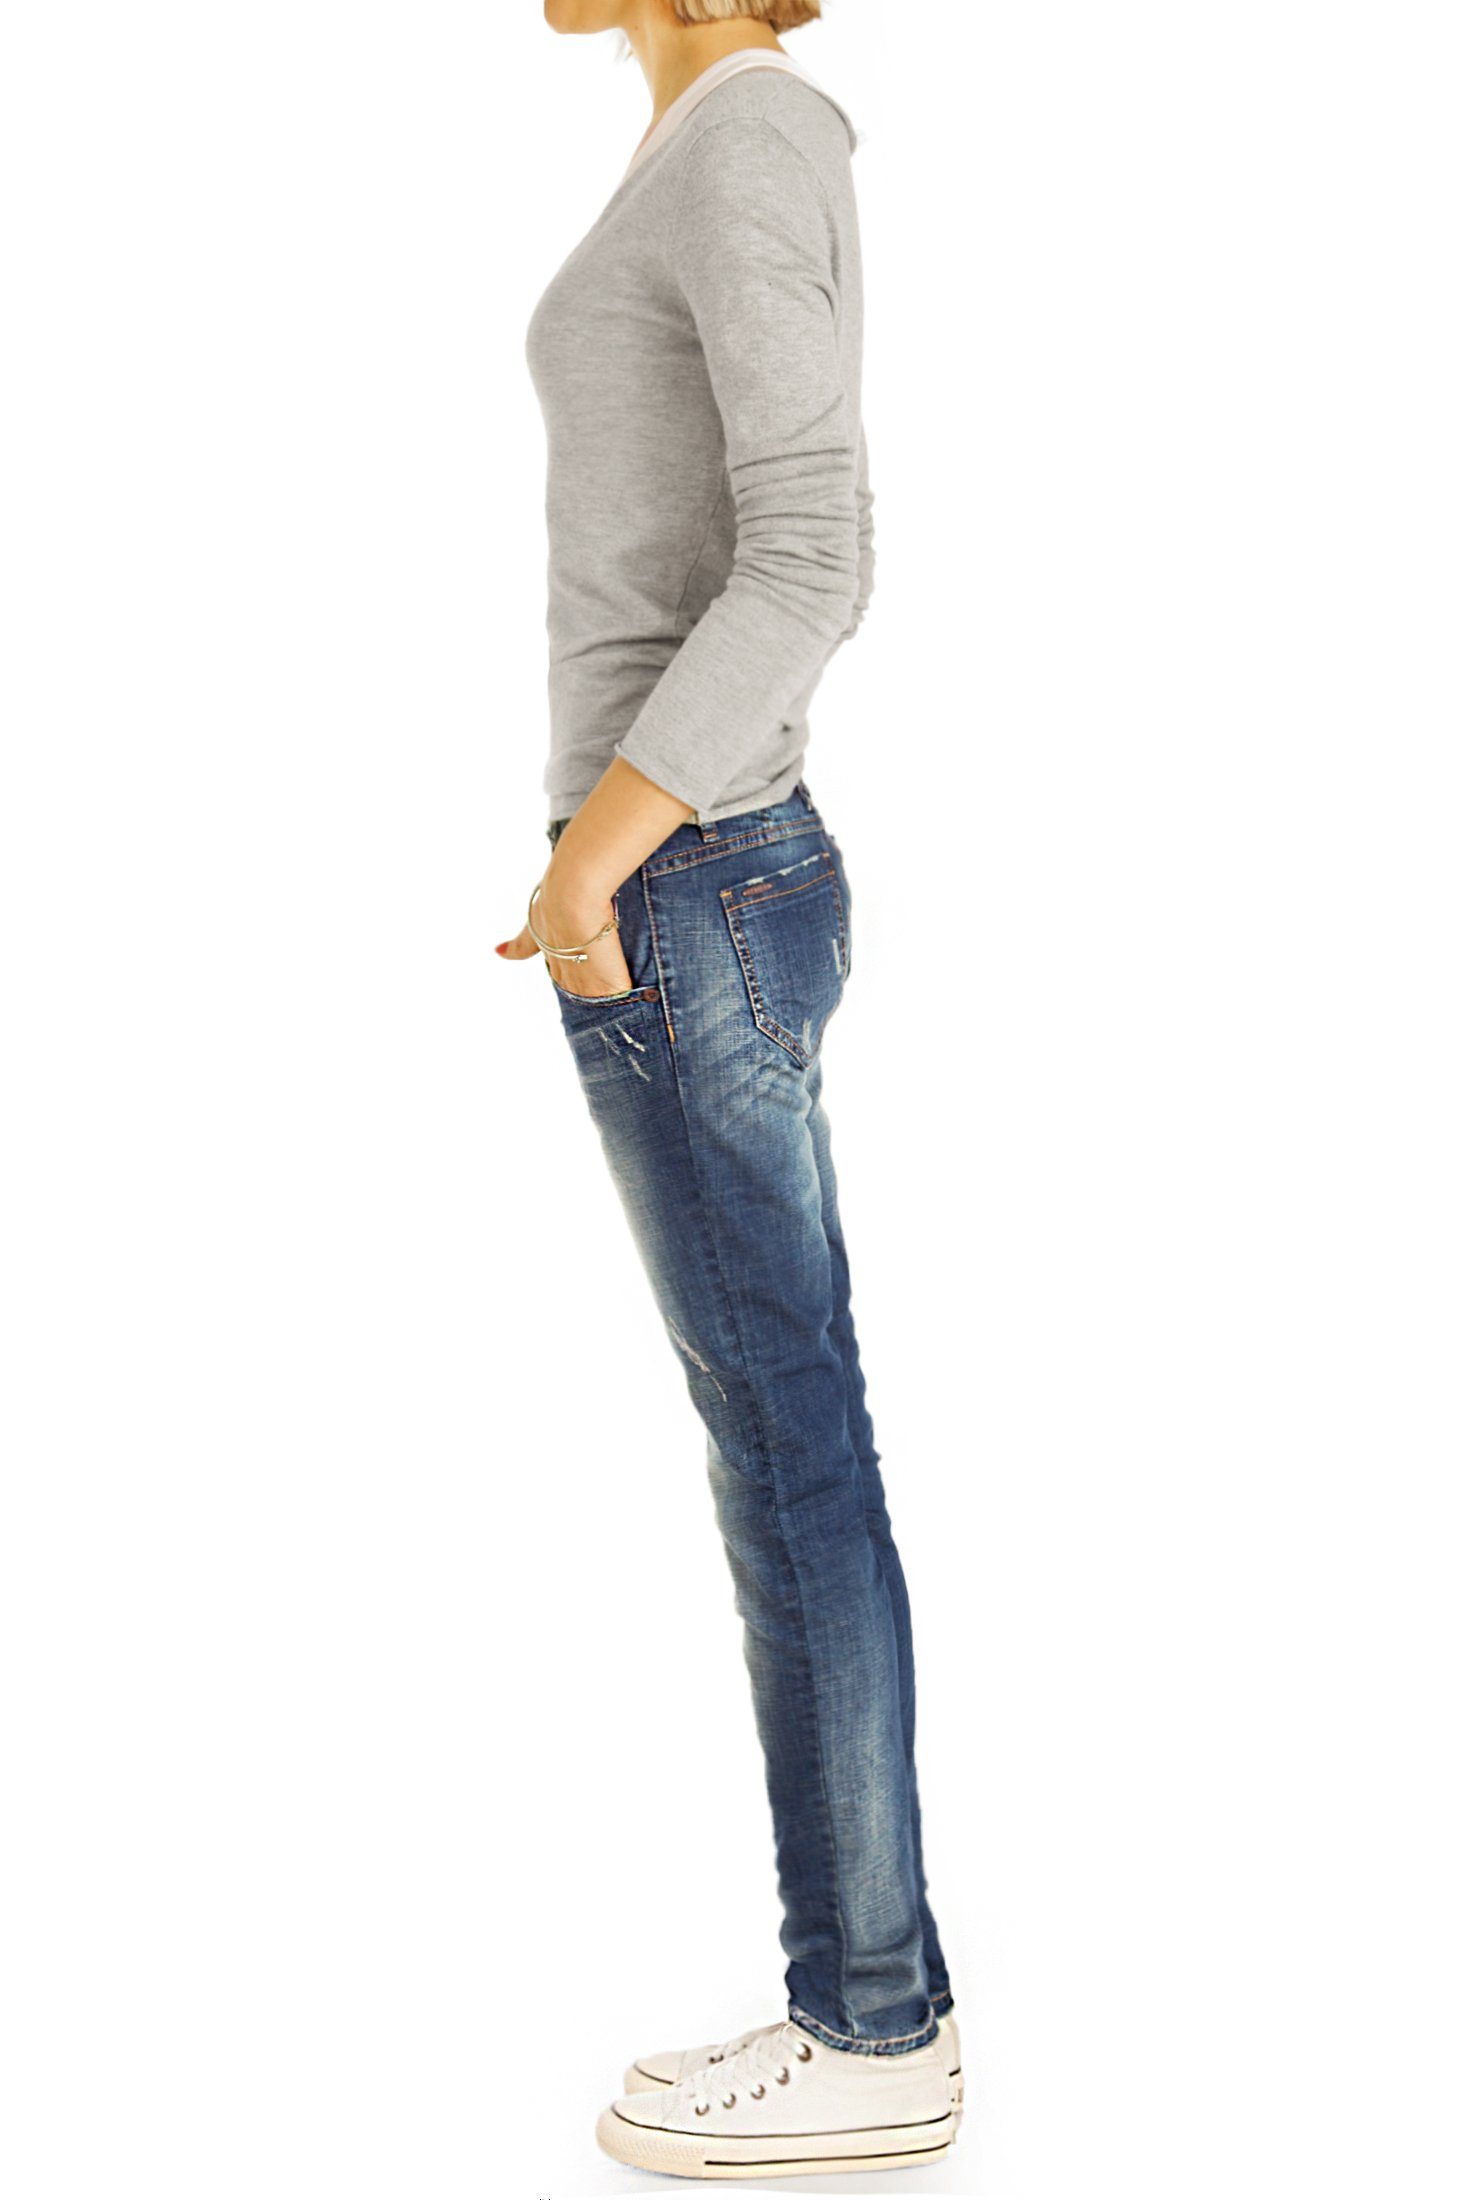 am Low-rise-Jeans Saum, j17g-3 Low be - Stretch-Anteil, 5-Pocket-Style Knopfleiste mit styled Damen mit Schlitz - Waist Hüftjeans